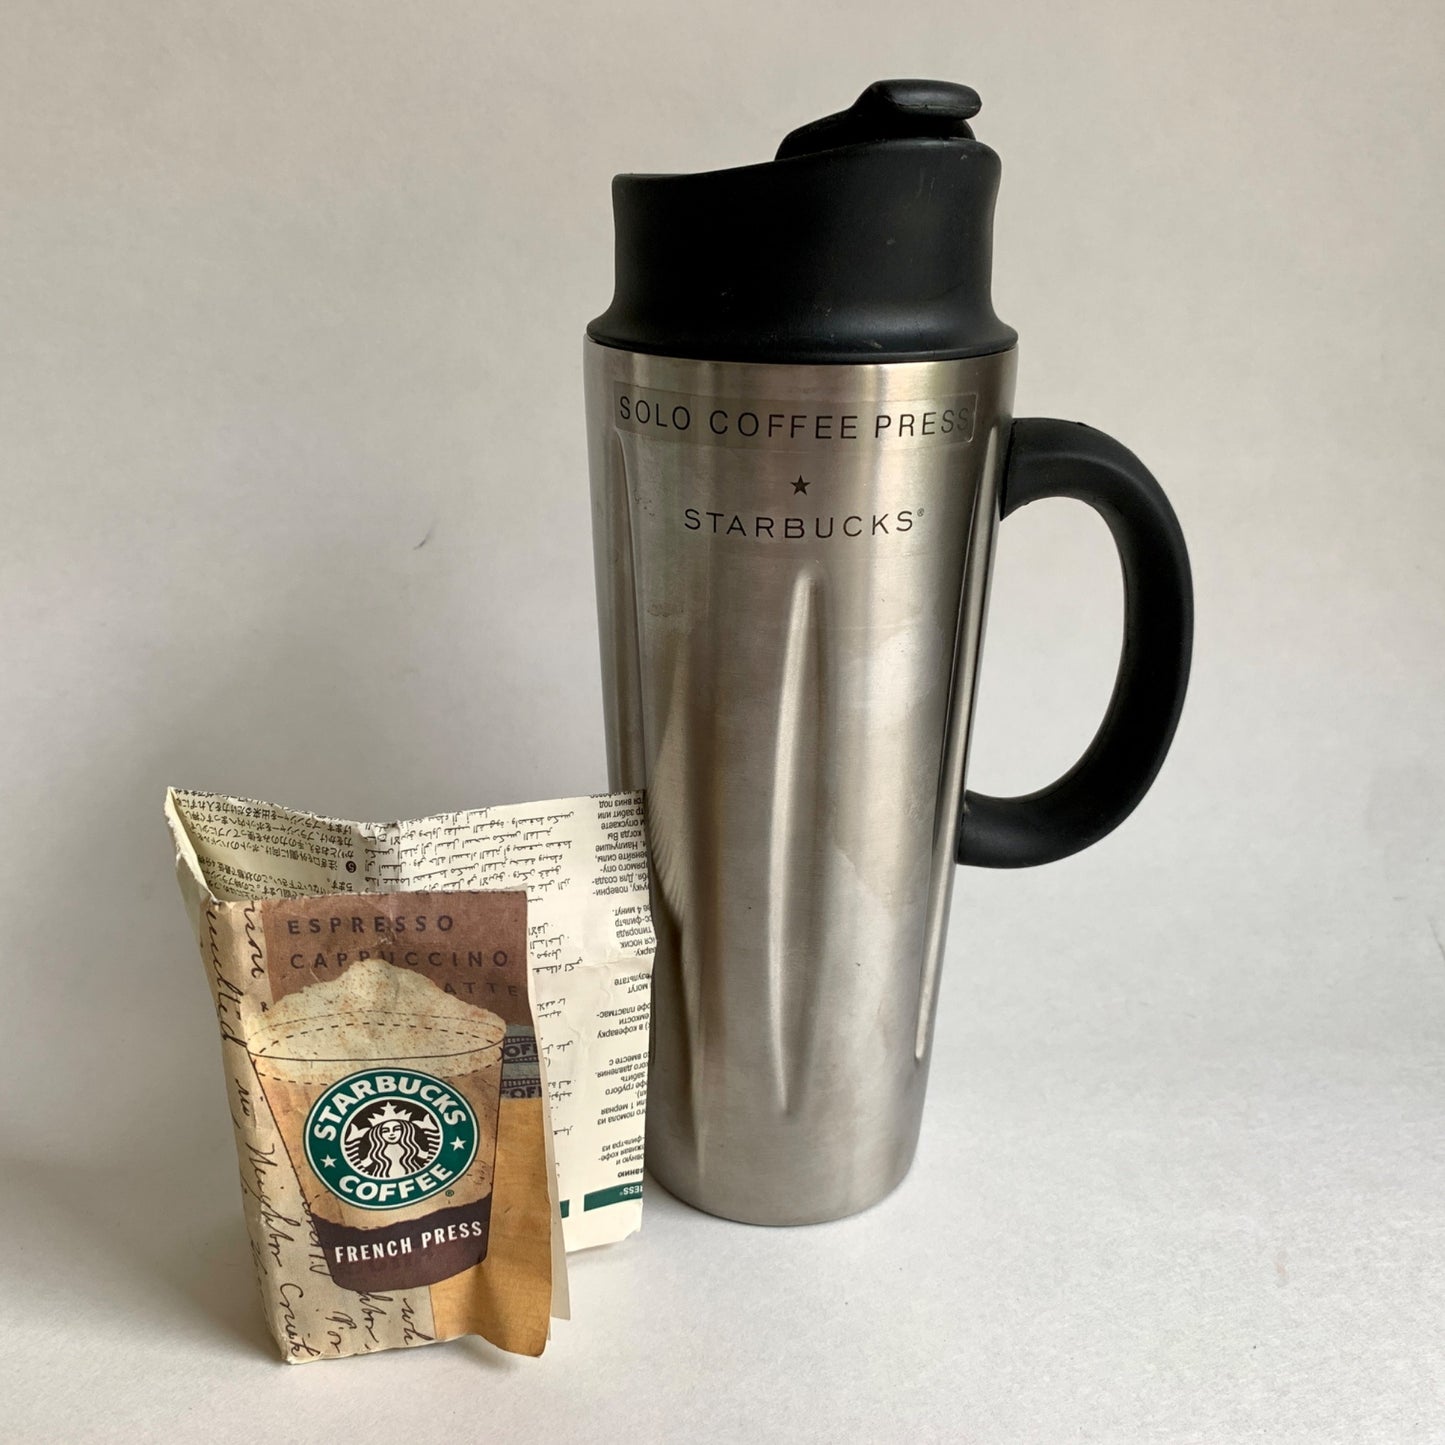 Starbucks Solo Coffee French Press Stainless Steel Travel Mug